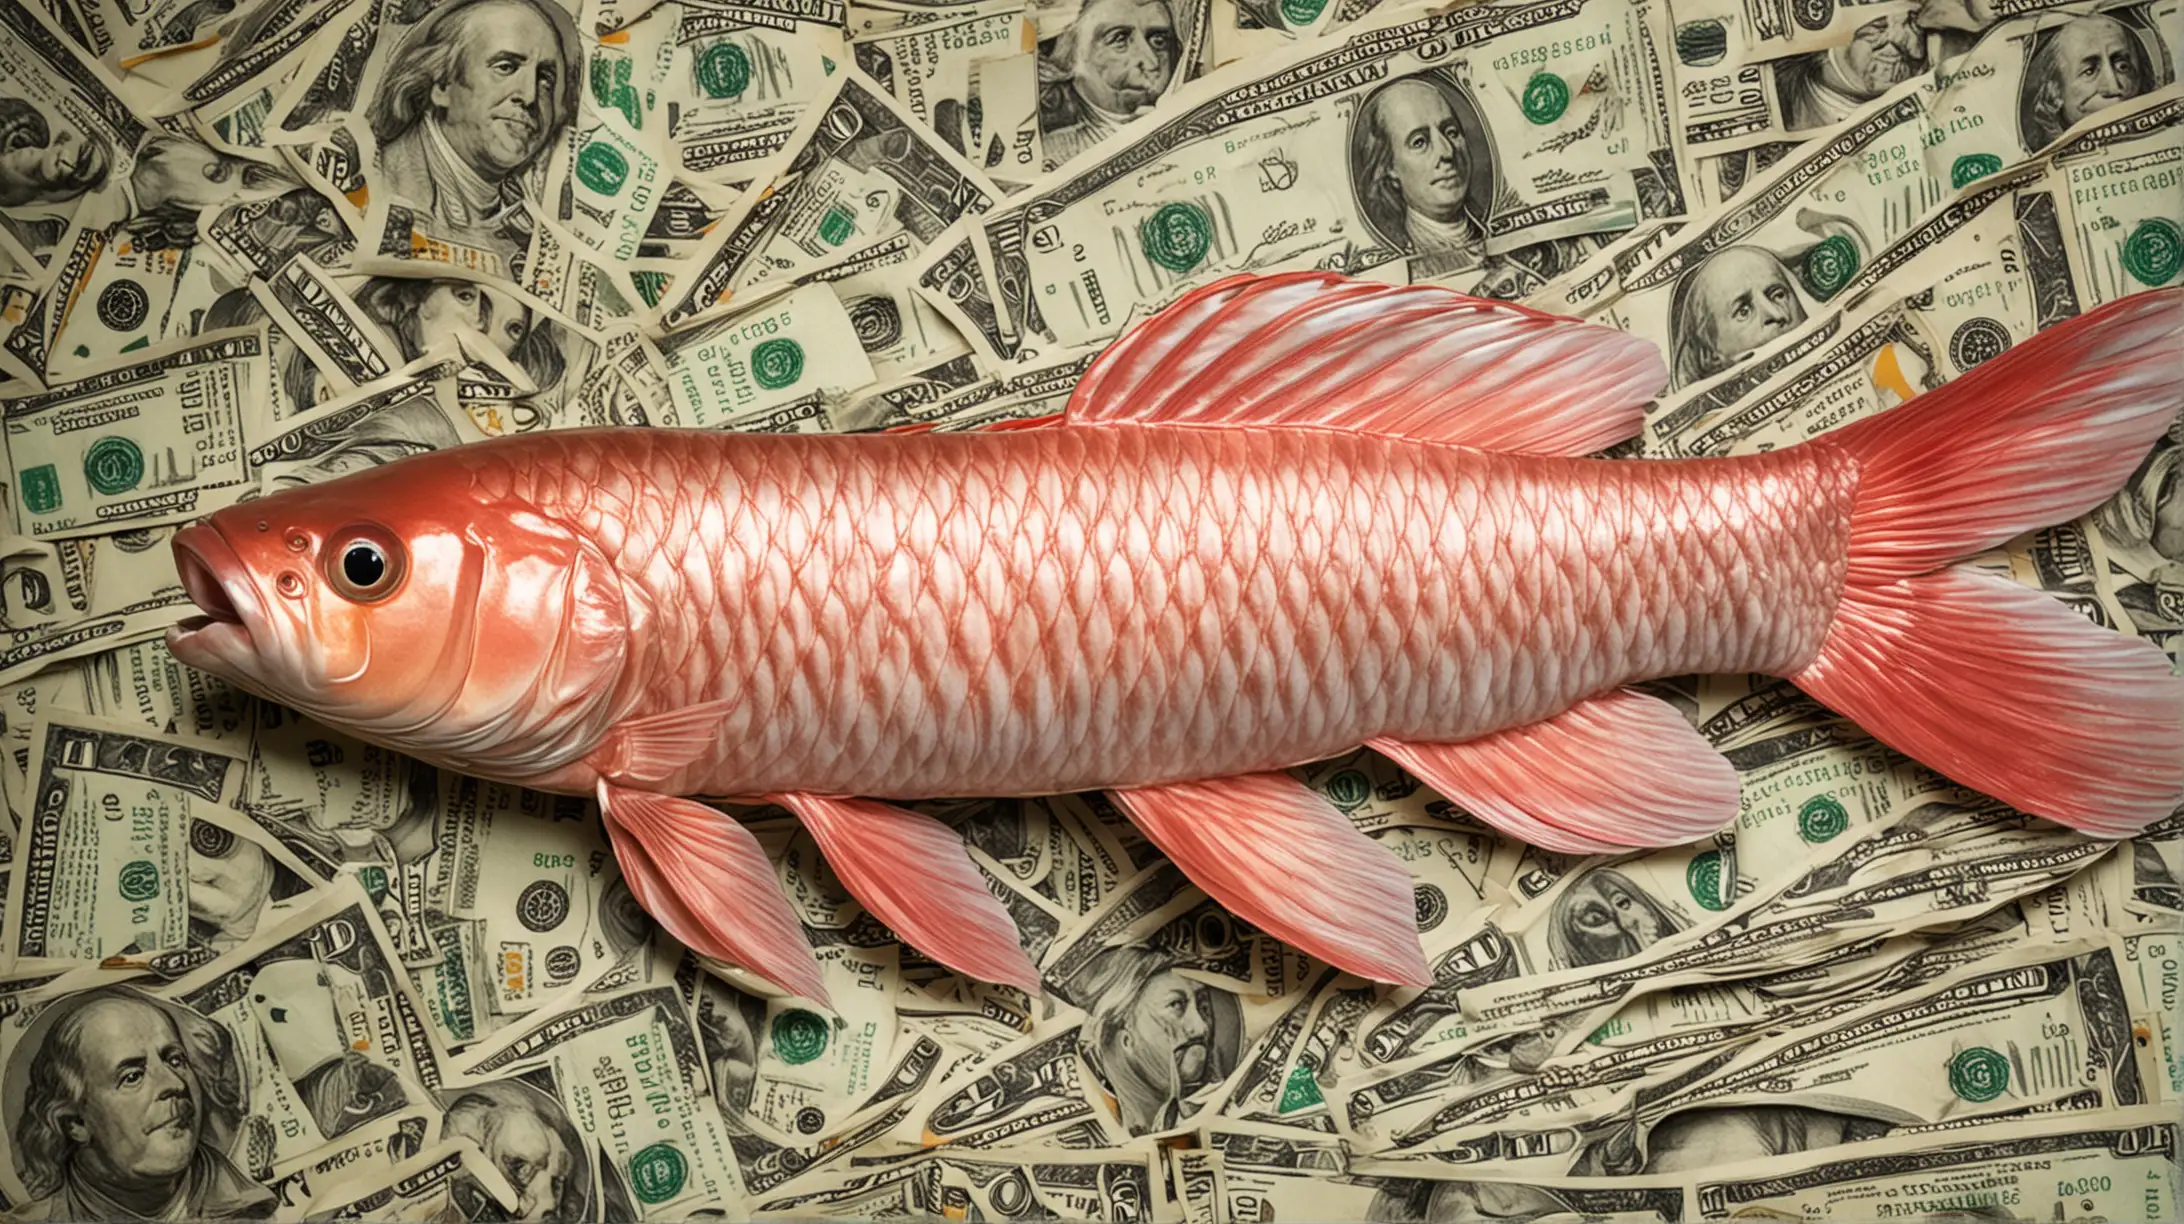 Large arowana fish in rainbow colors and lots of dollar bills